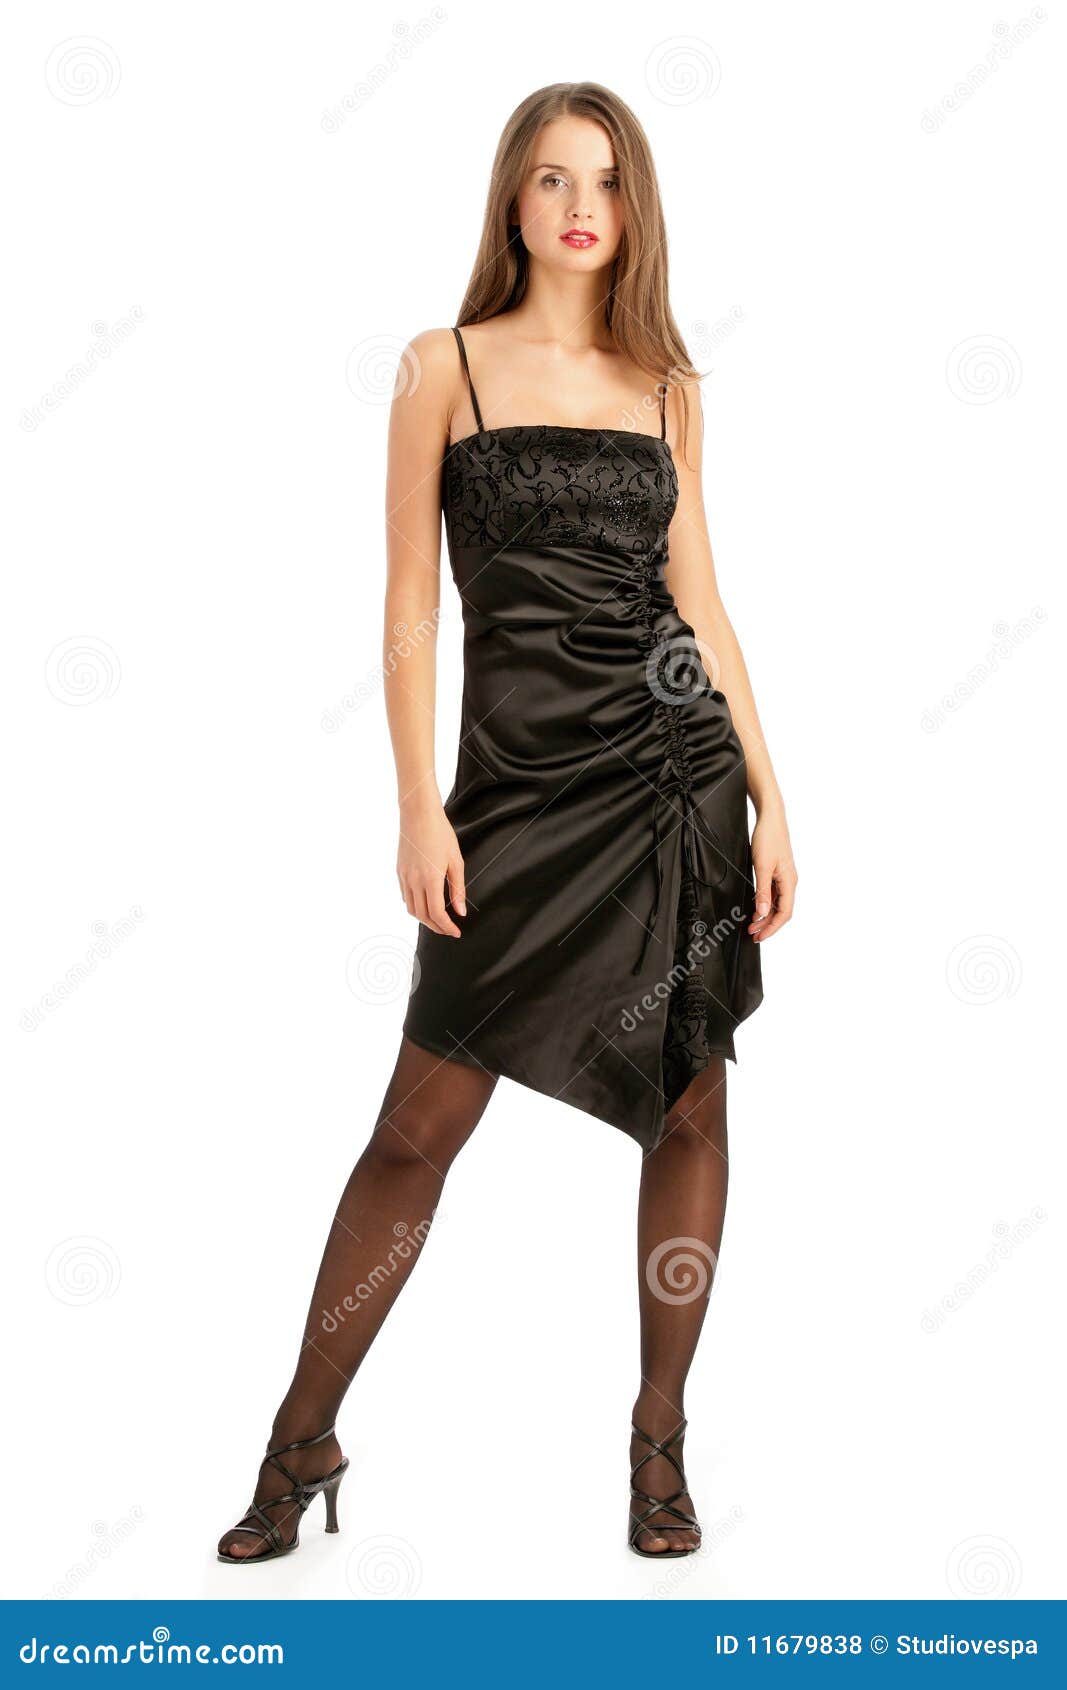 woman-wearing-elegant-cocktail-dress-11679838.jpg